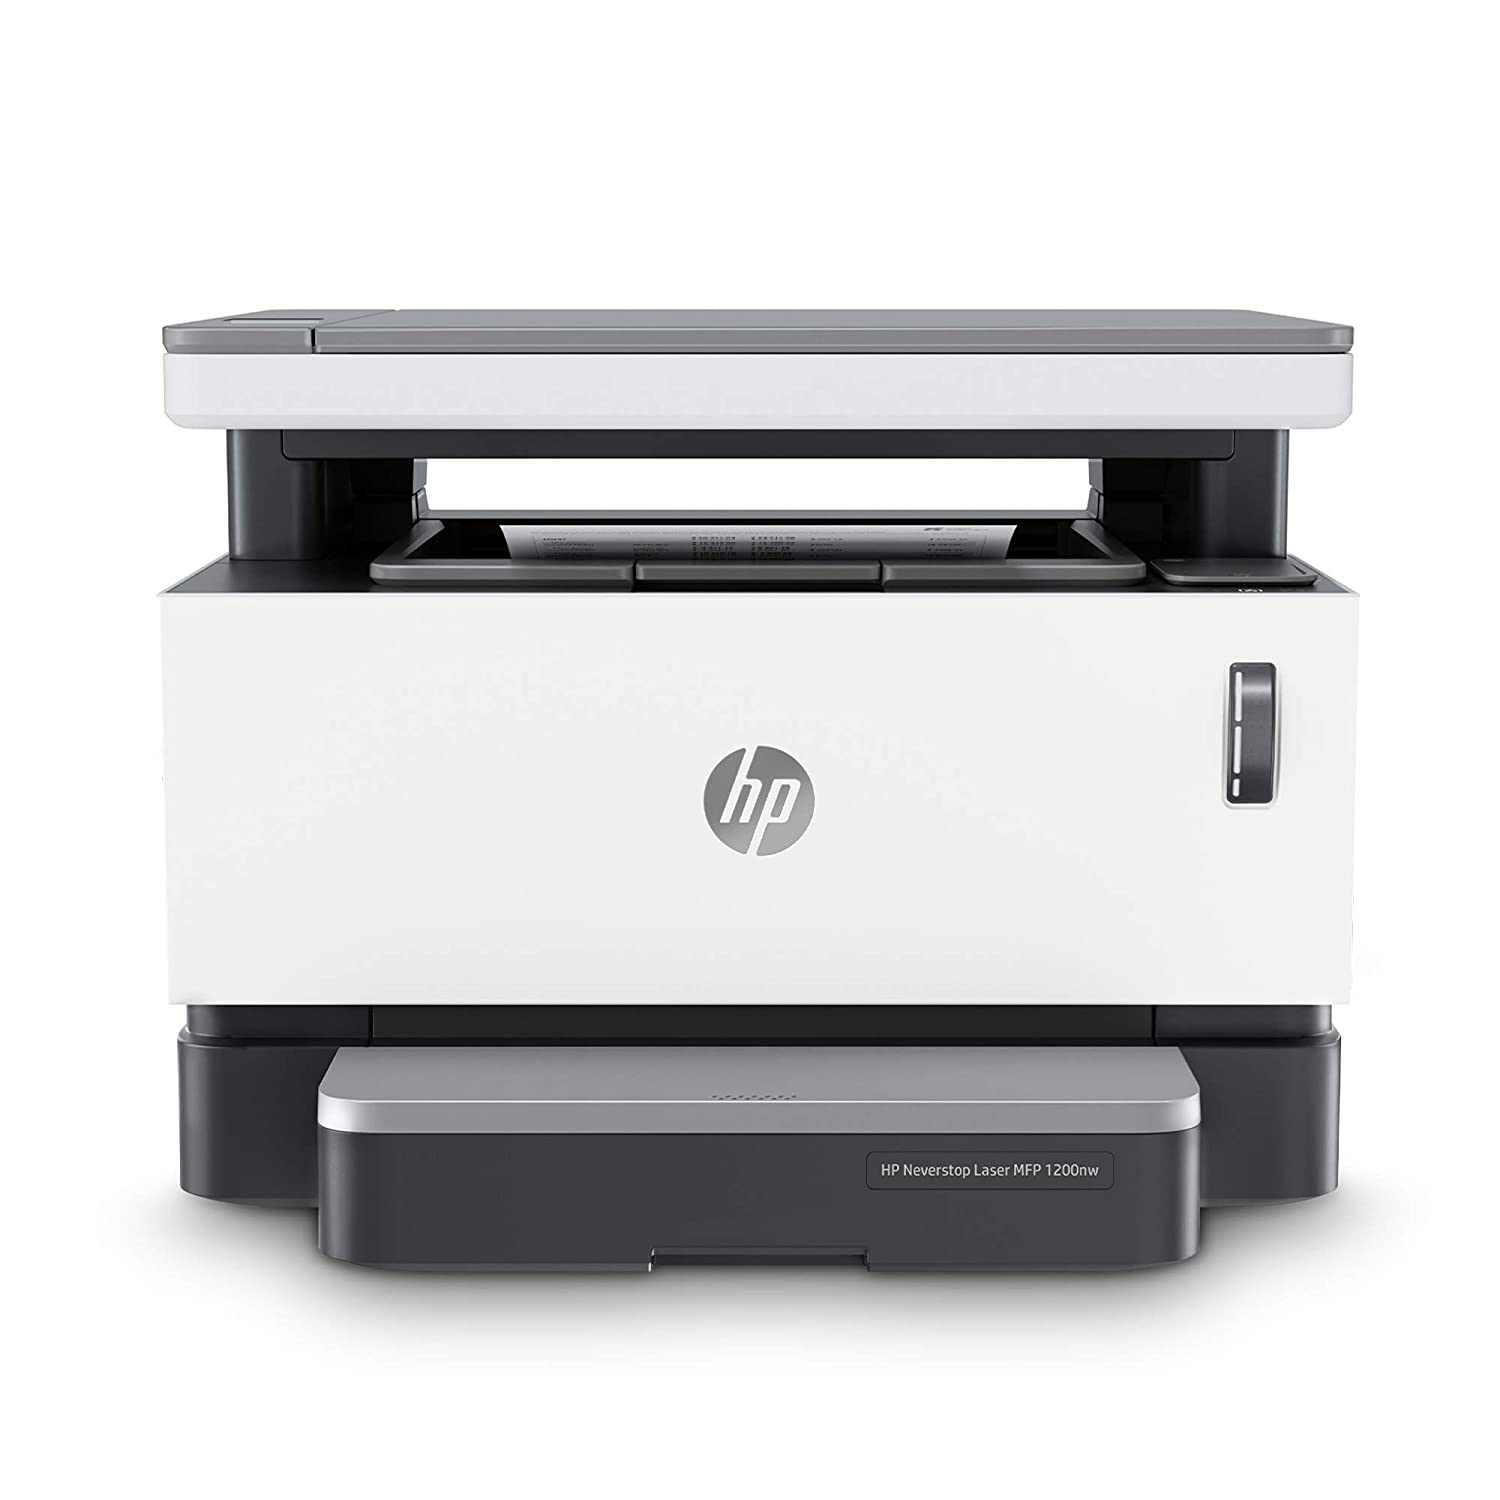 HP Neverstop Laser MFP 1200nw Printer